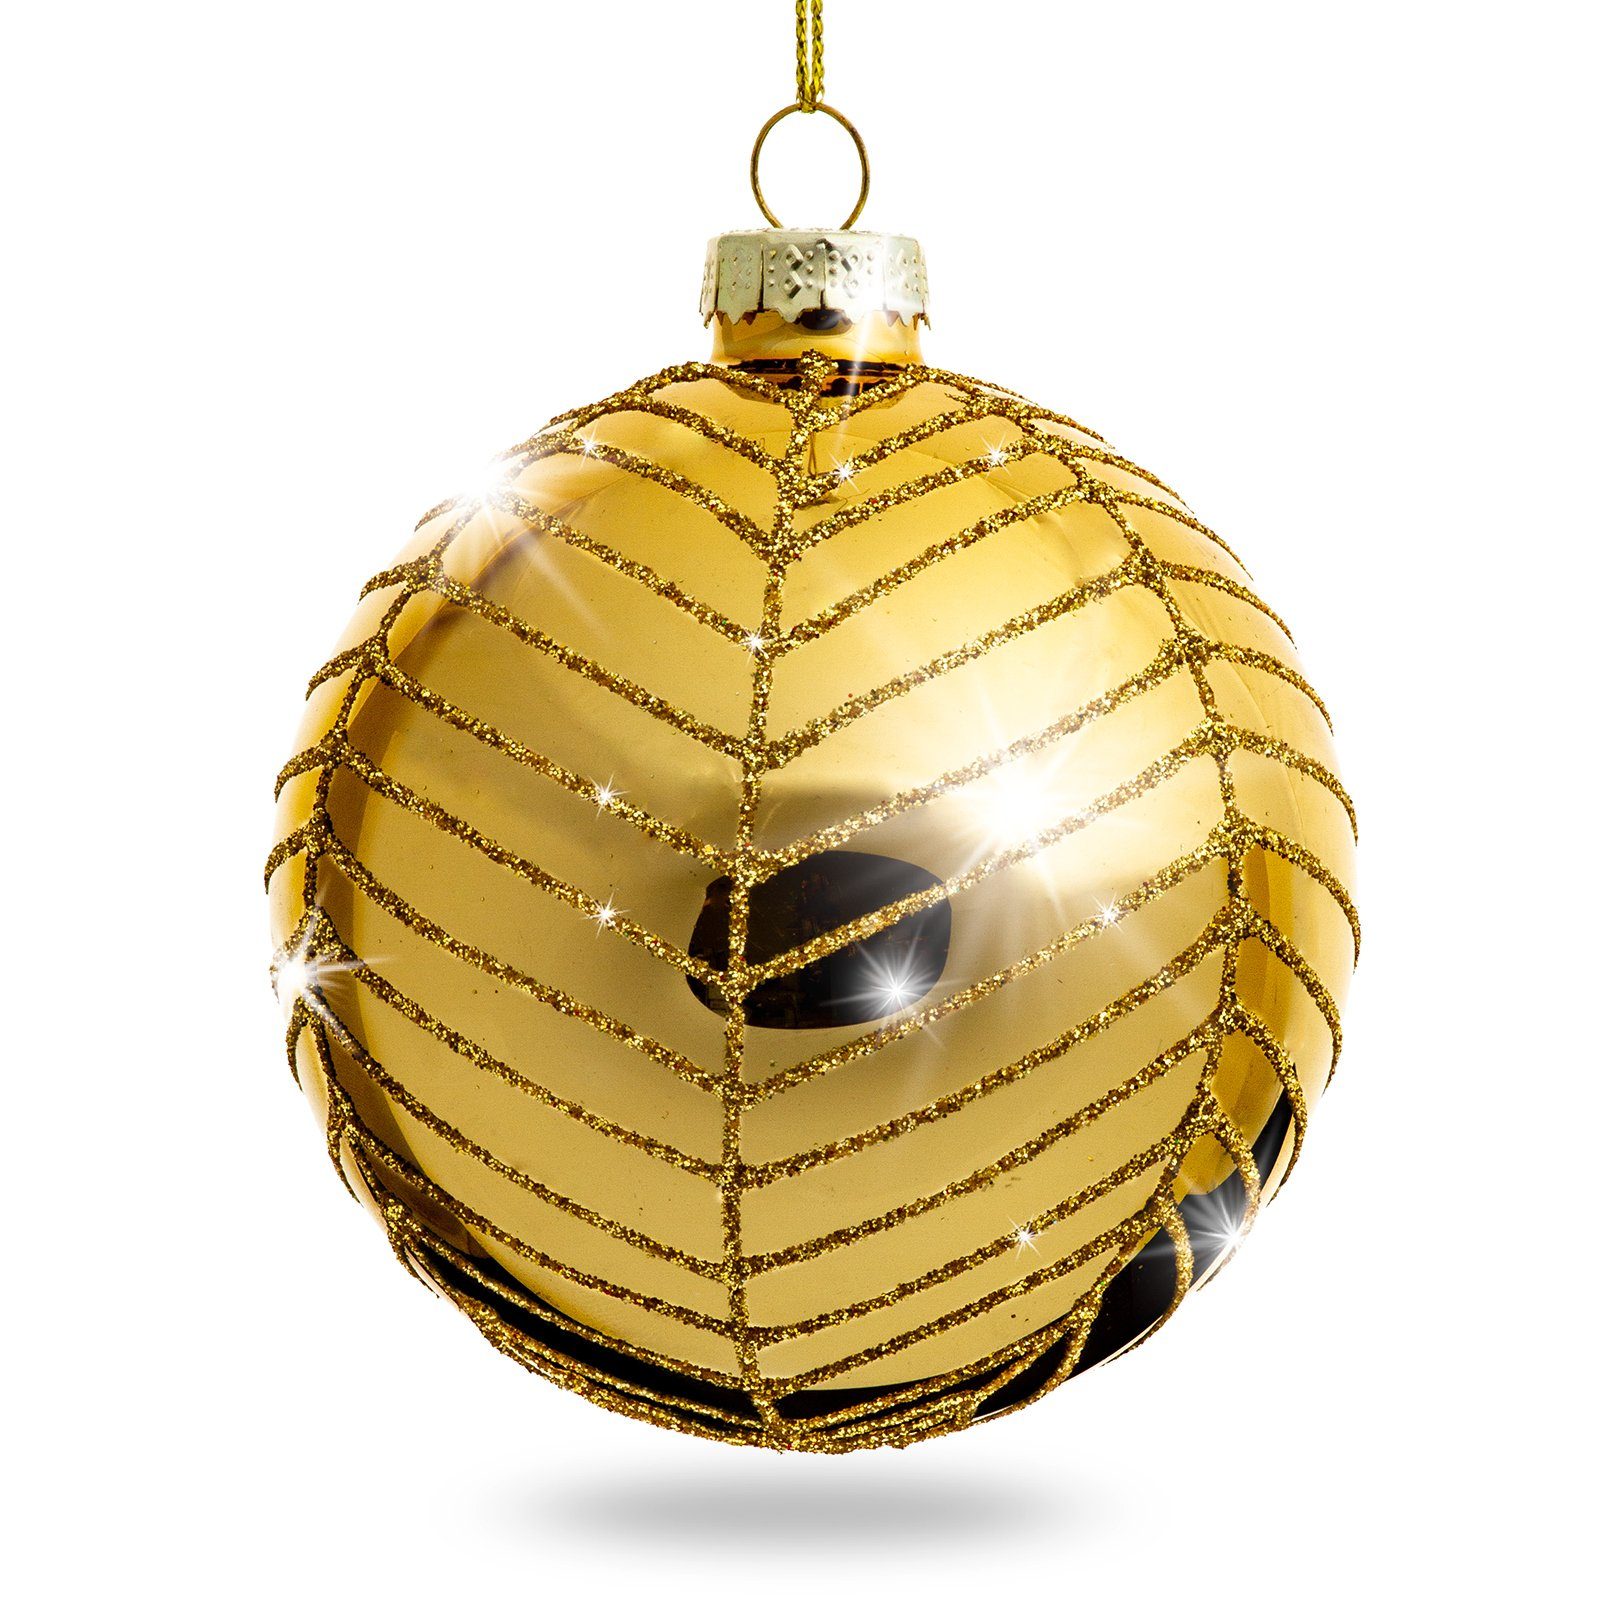 SIKORA Christbaumschmuck Highlights Gold 4er Set Christbaumkugeln aus Glas mit Verzierung Modell New York gold